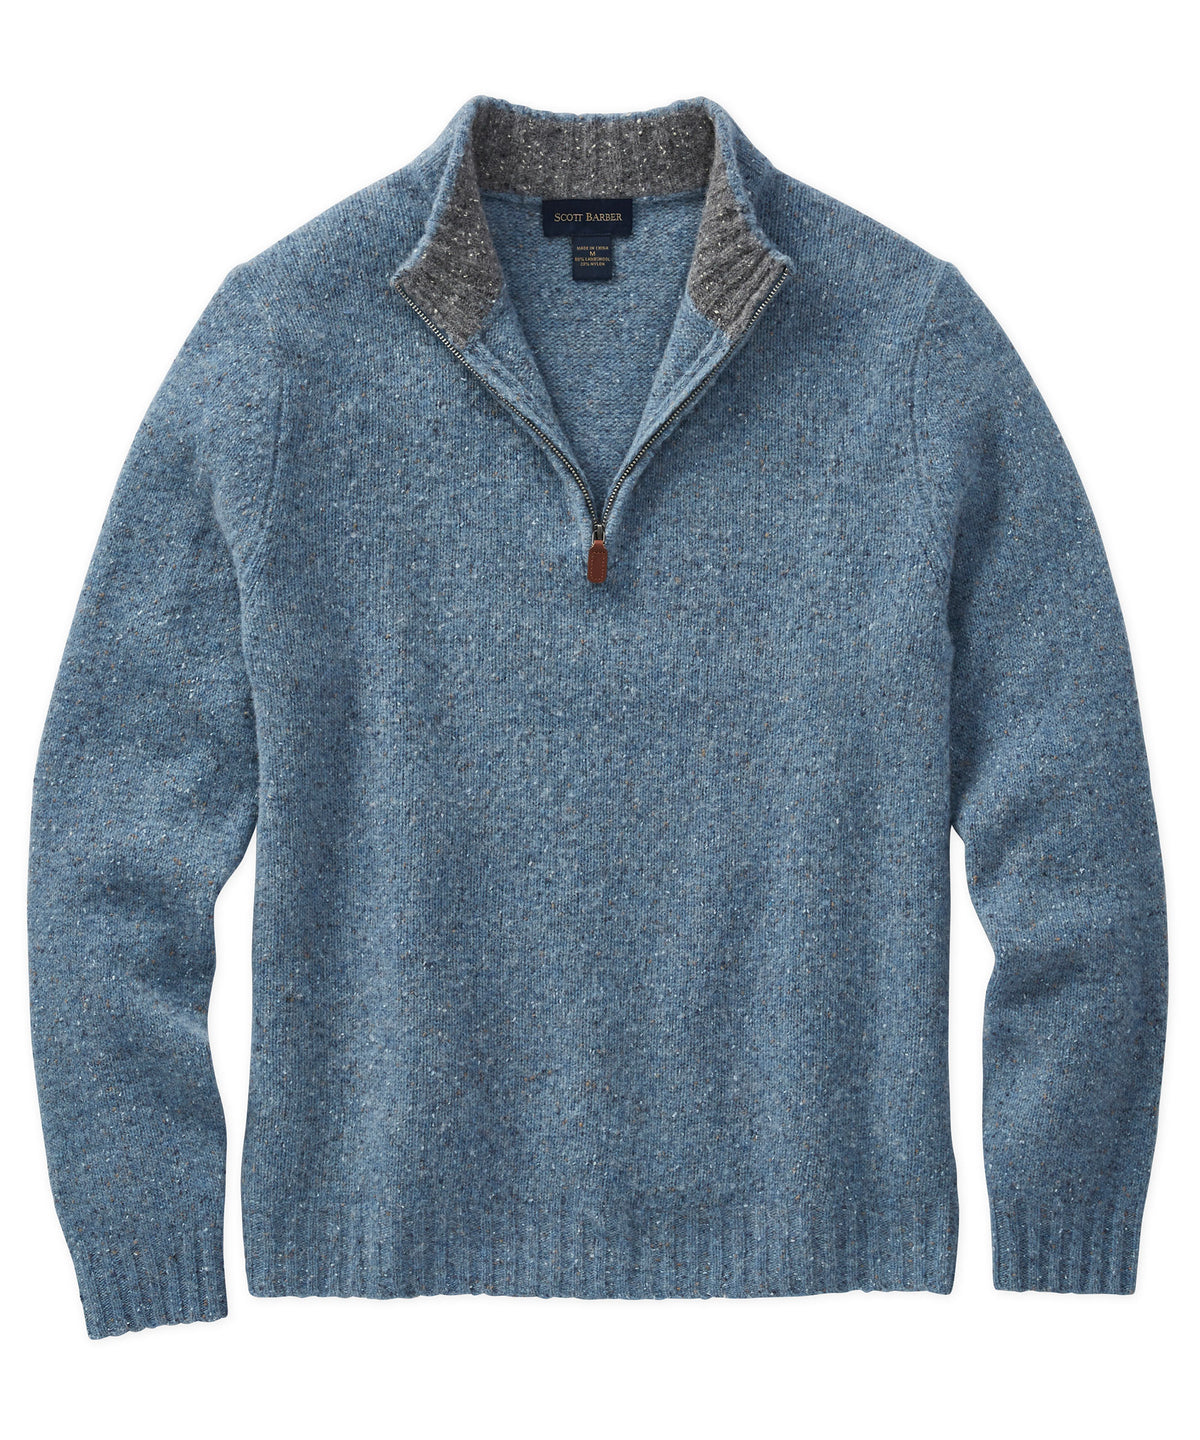 Scott Barber Lambswool Blend Donegal Quarter-Zip Sweater